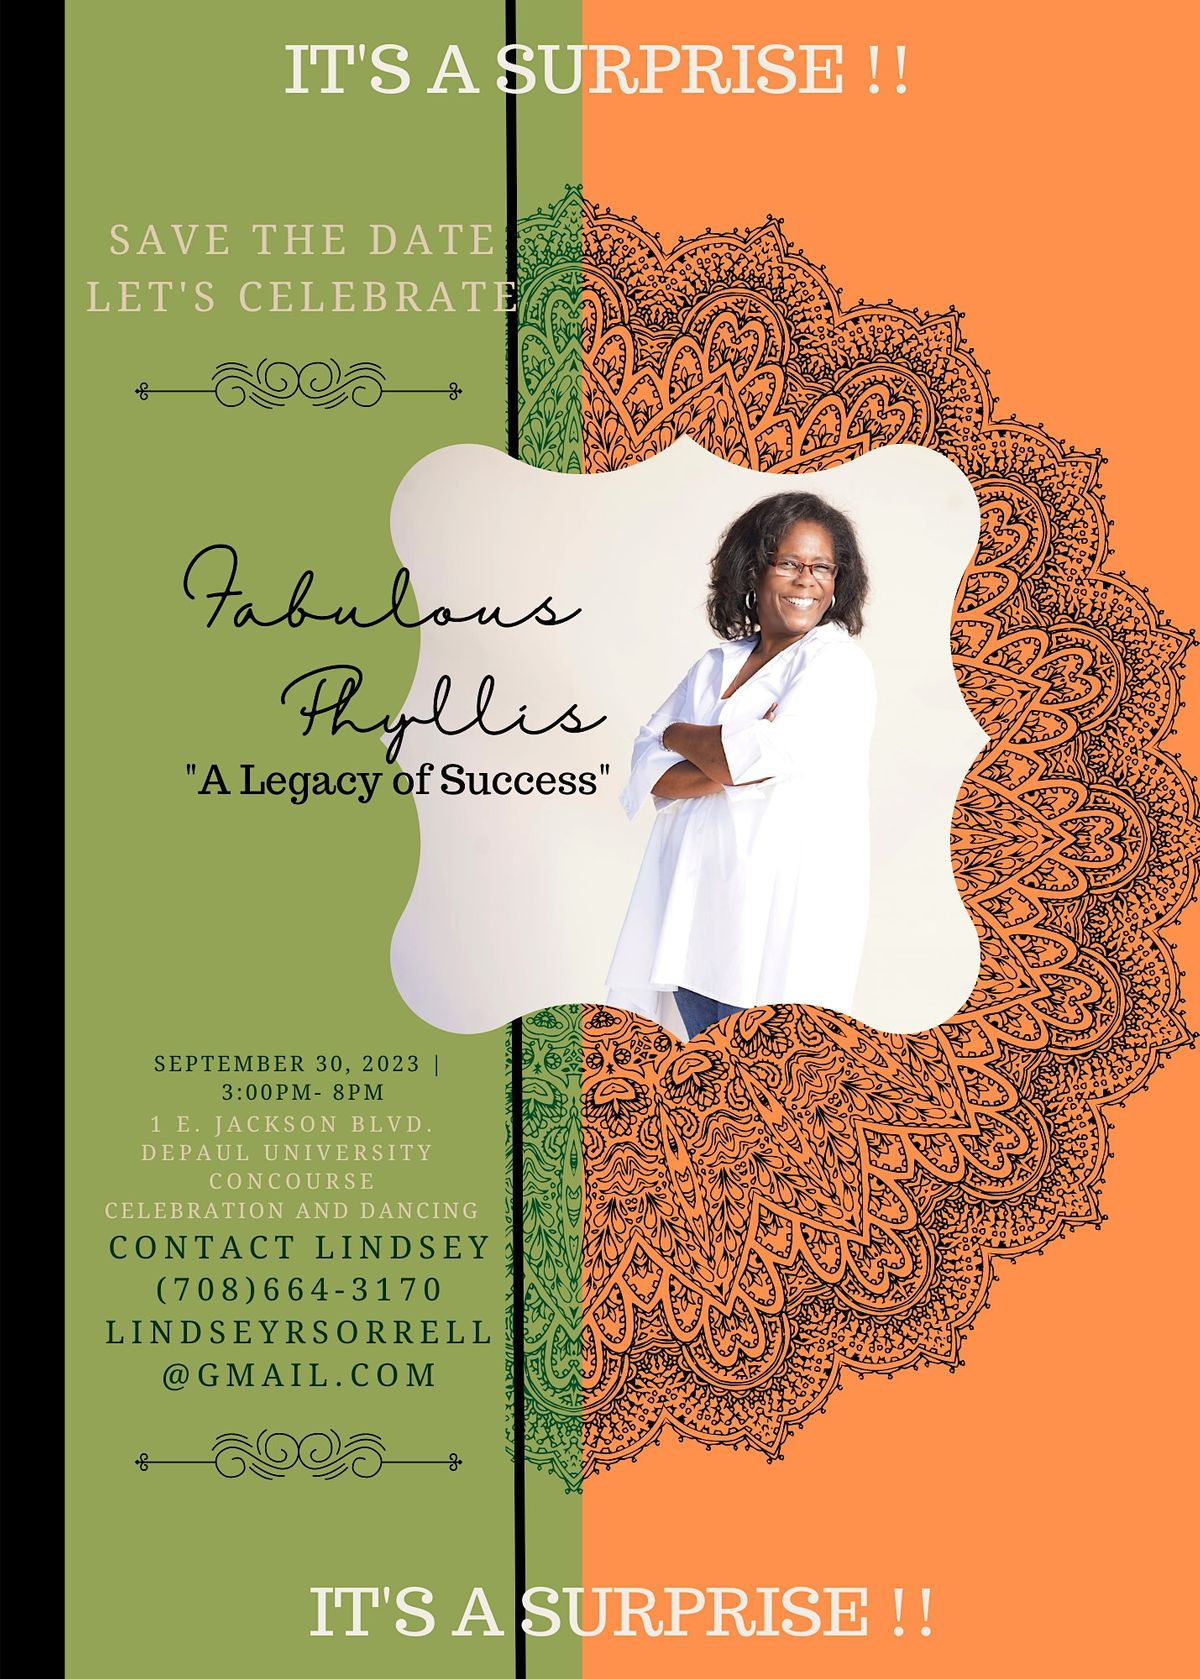 Celebrating Fabulous Phyllis: A Legacy of Success